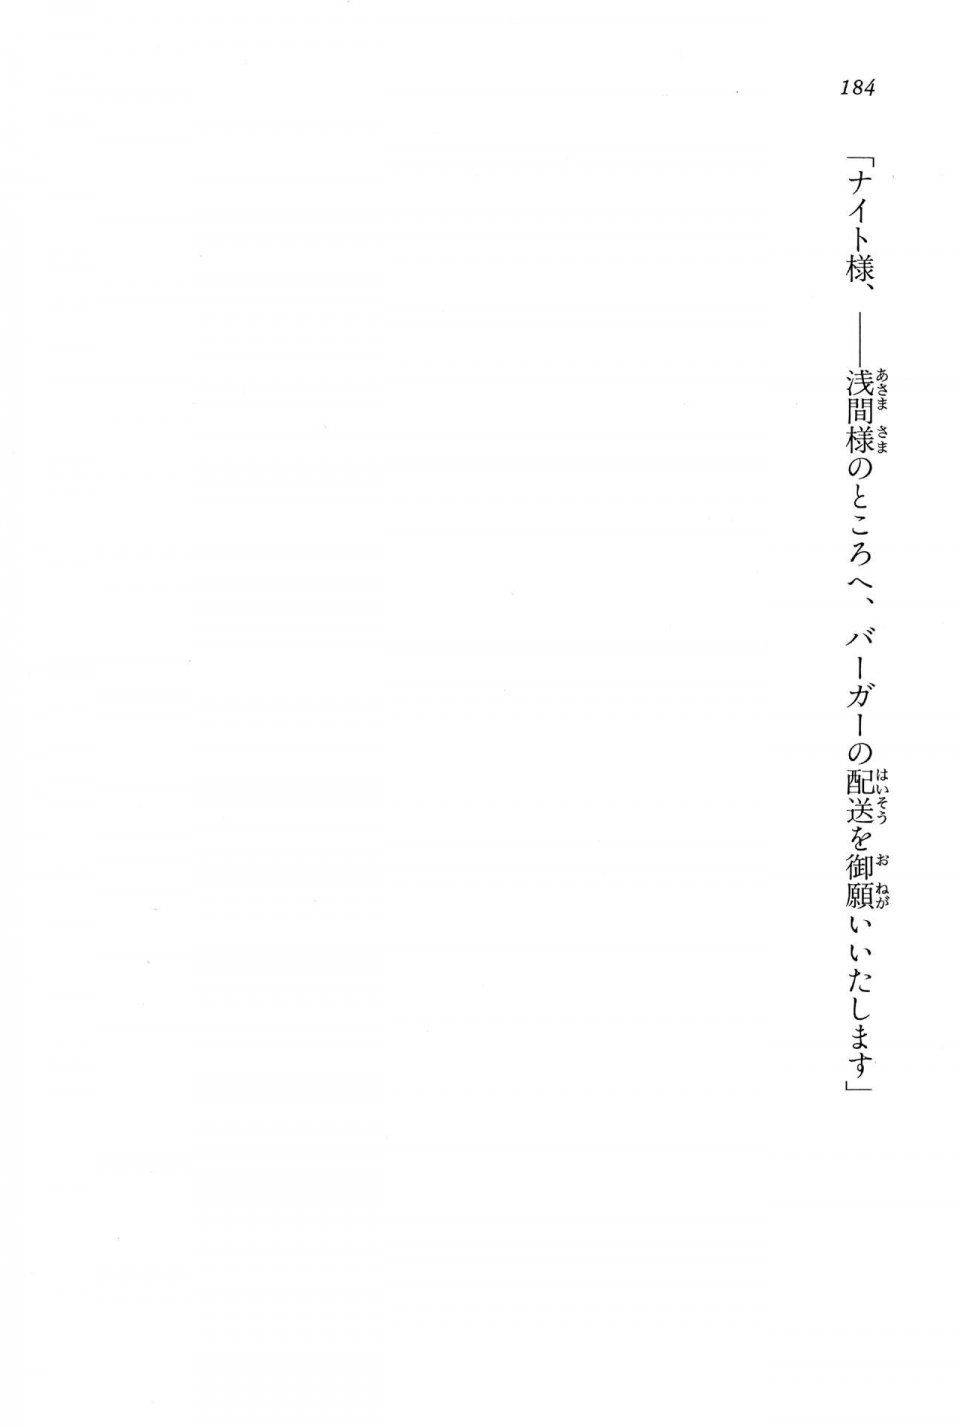 Kyoukai Senjou no Horizon BD Special Mininovel Vol 6(3B) - Photo #188